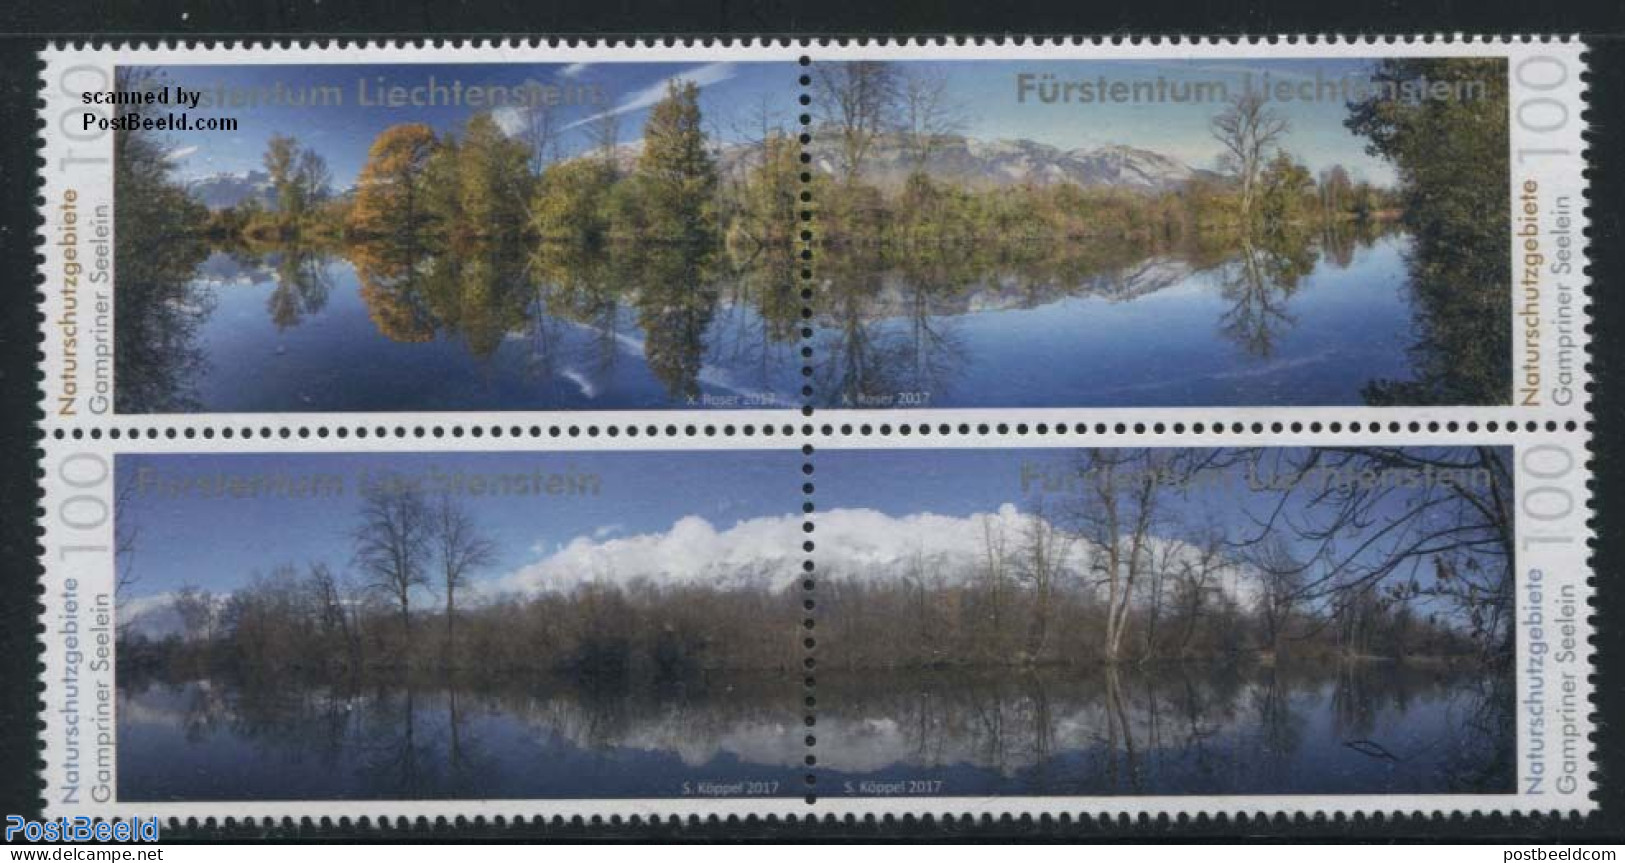 Liechtenstein 2017 Gampriner Lake 4v [+], Mint NH, Nature - National Parks - Water, Dams & Falls - Nuovi